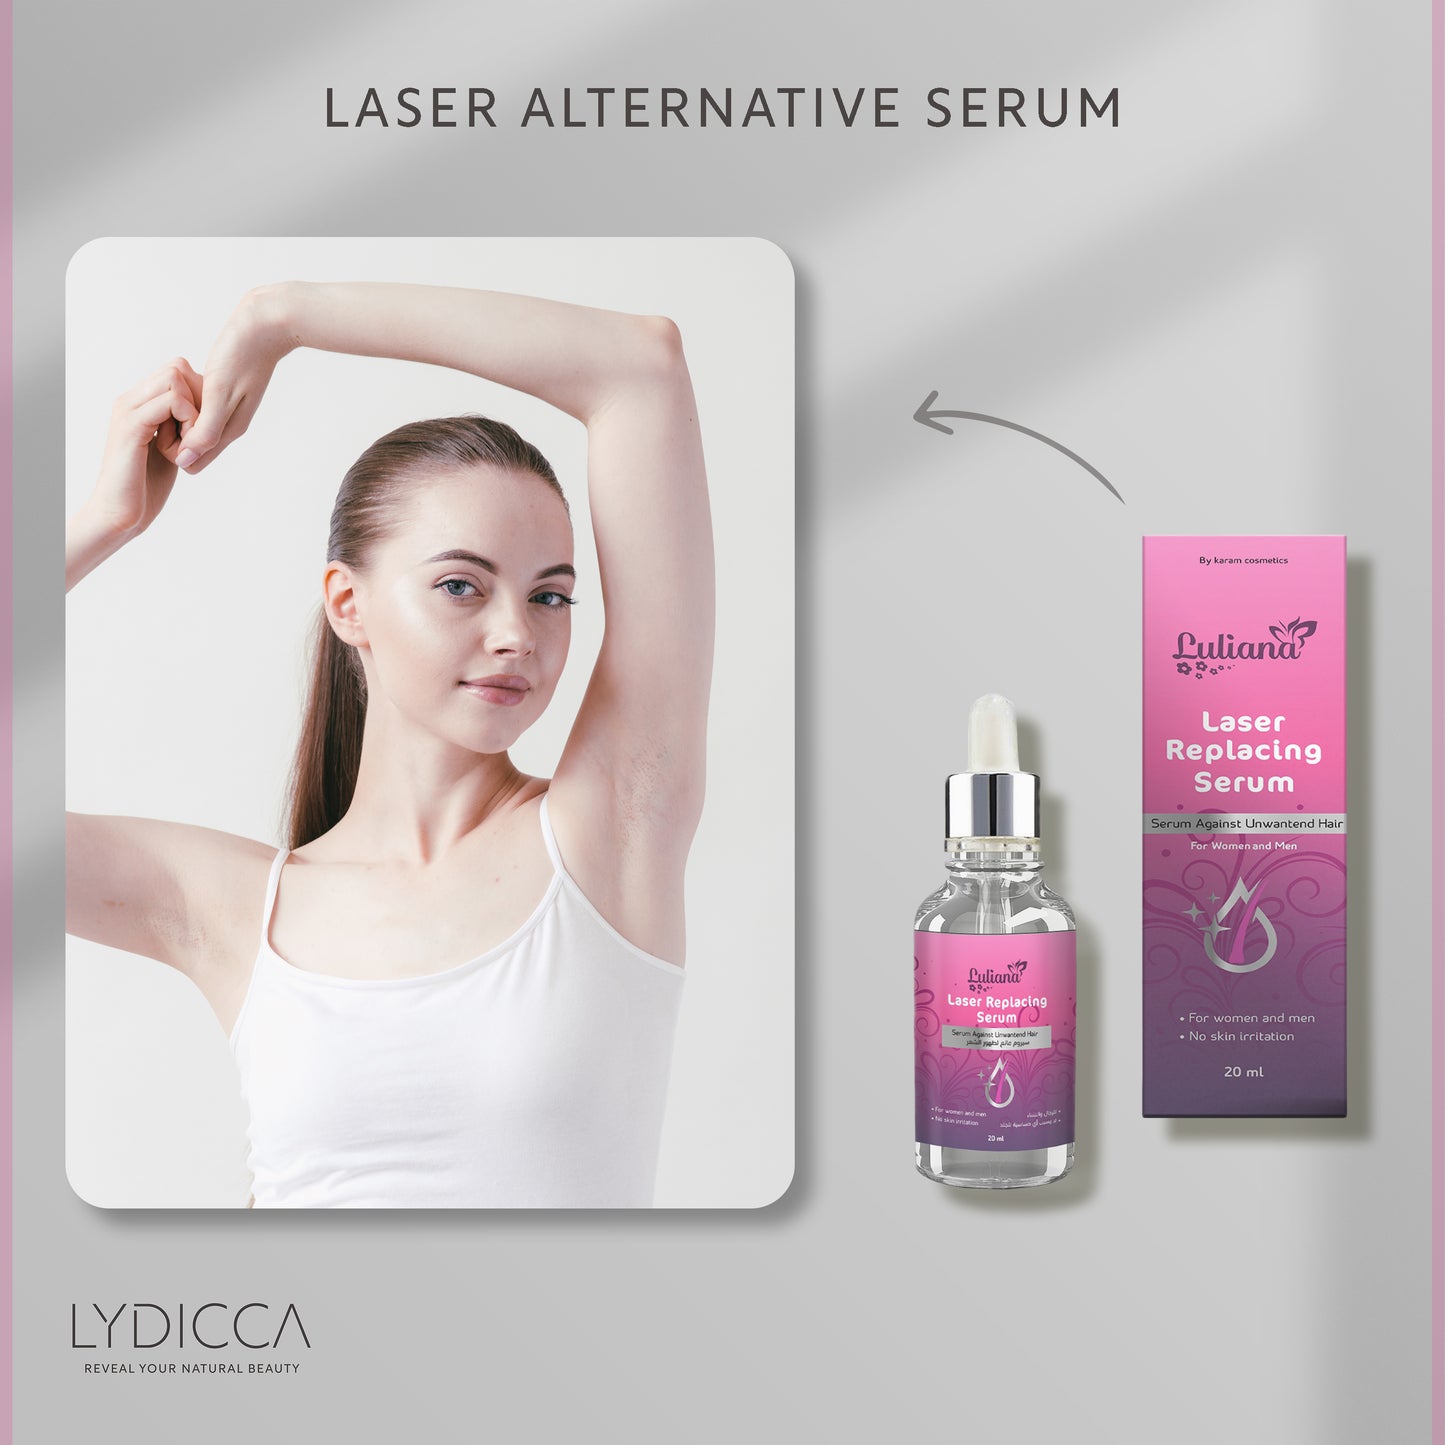 Laser Alternative Serum - Luliana